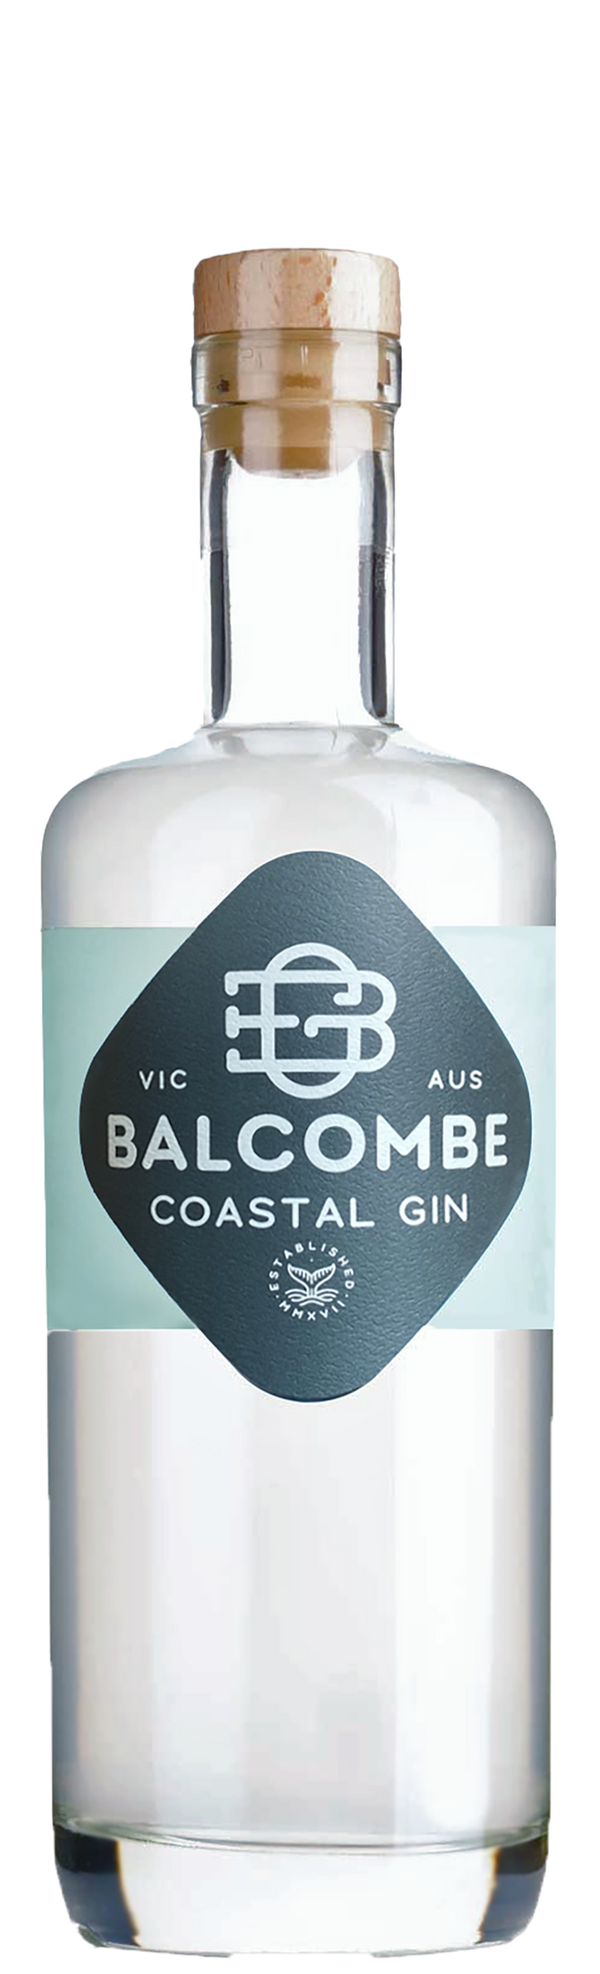 Balcombe Coastal Gin (500ml)